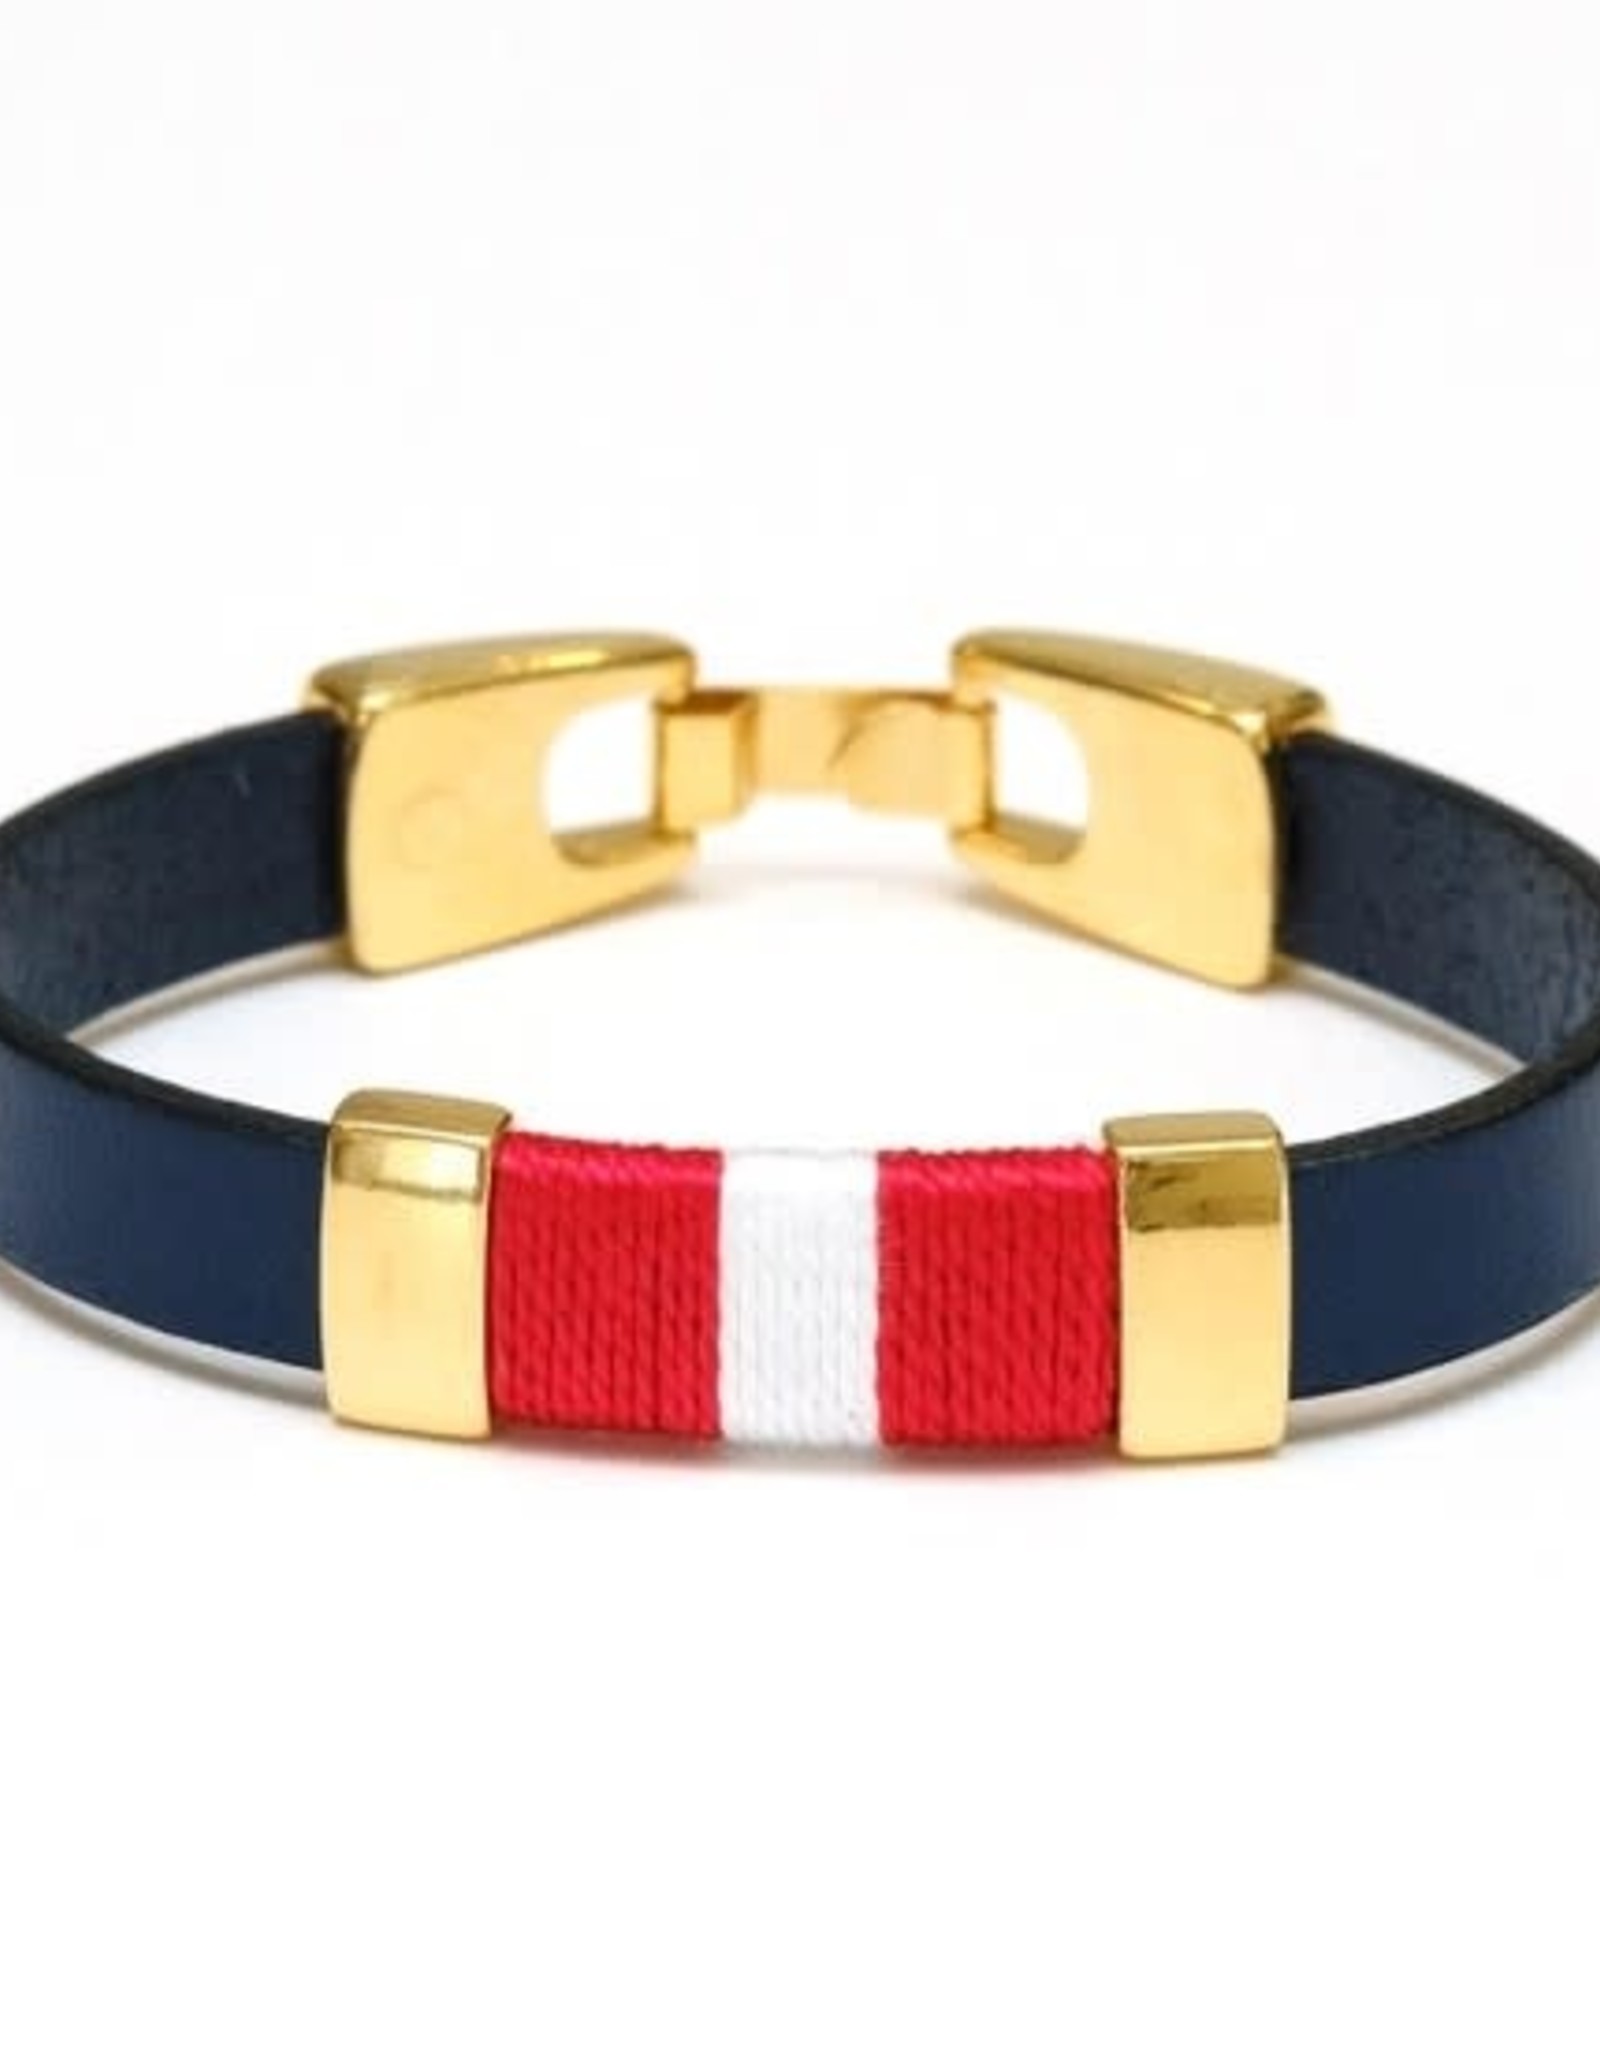 Allison Cole Jewelry Bristol Bracelet - Navy/Red/White/Gold S